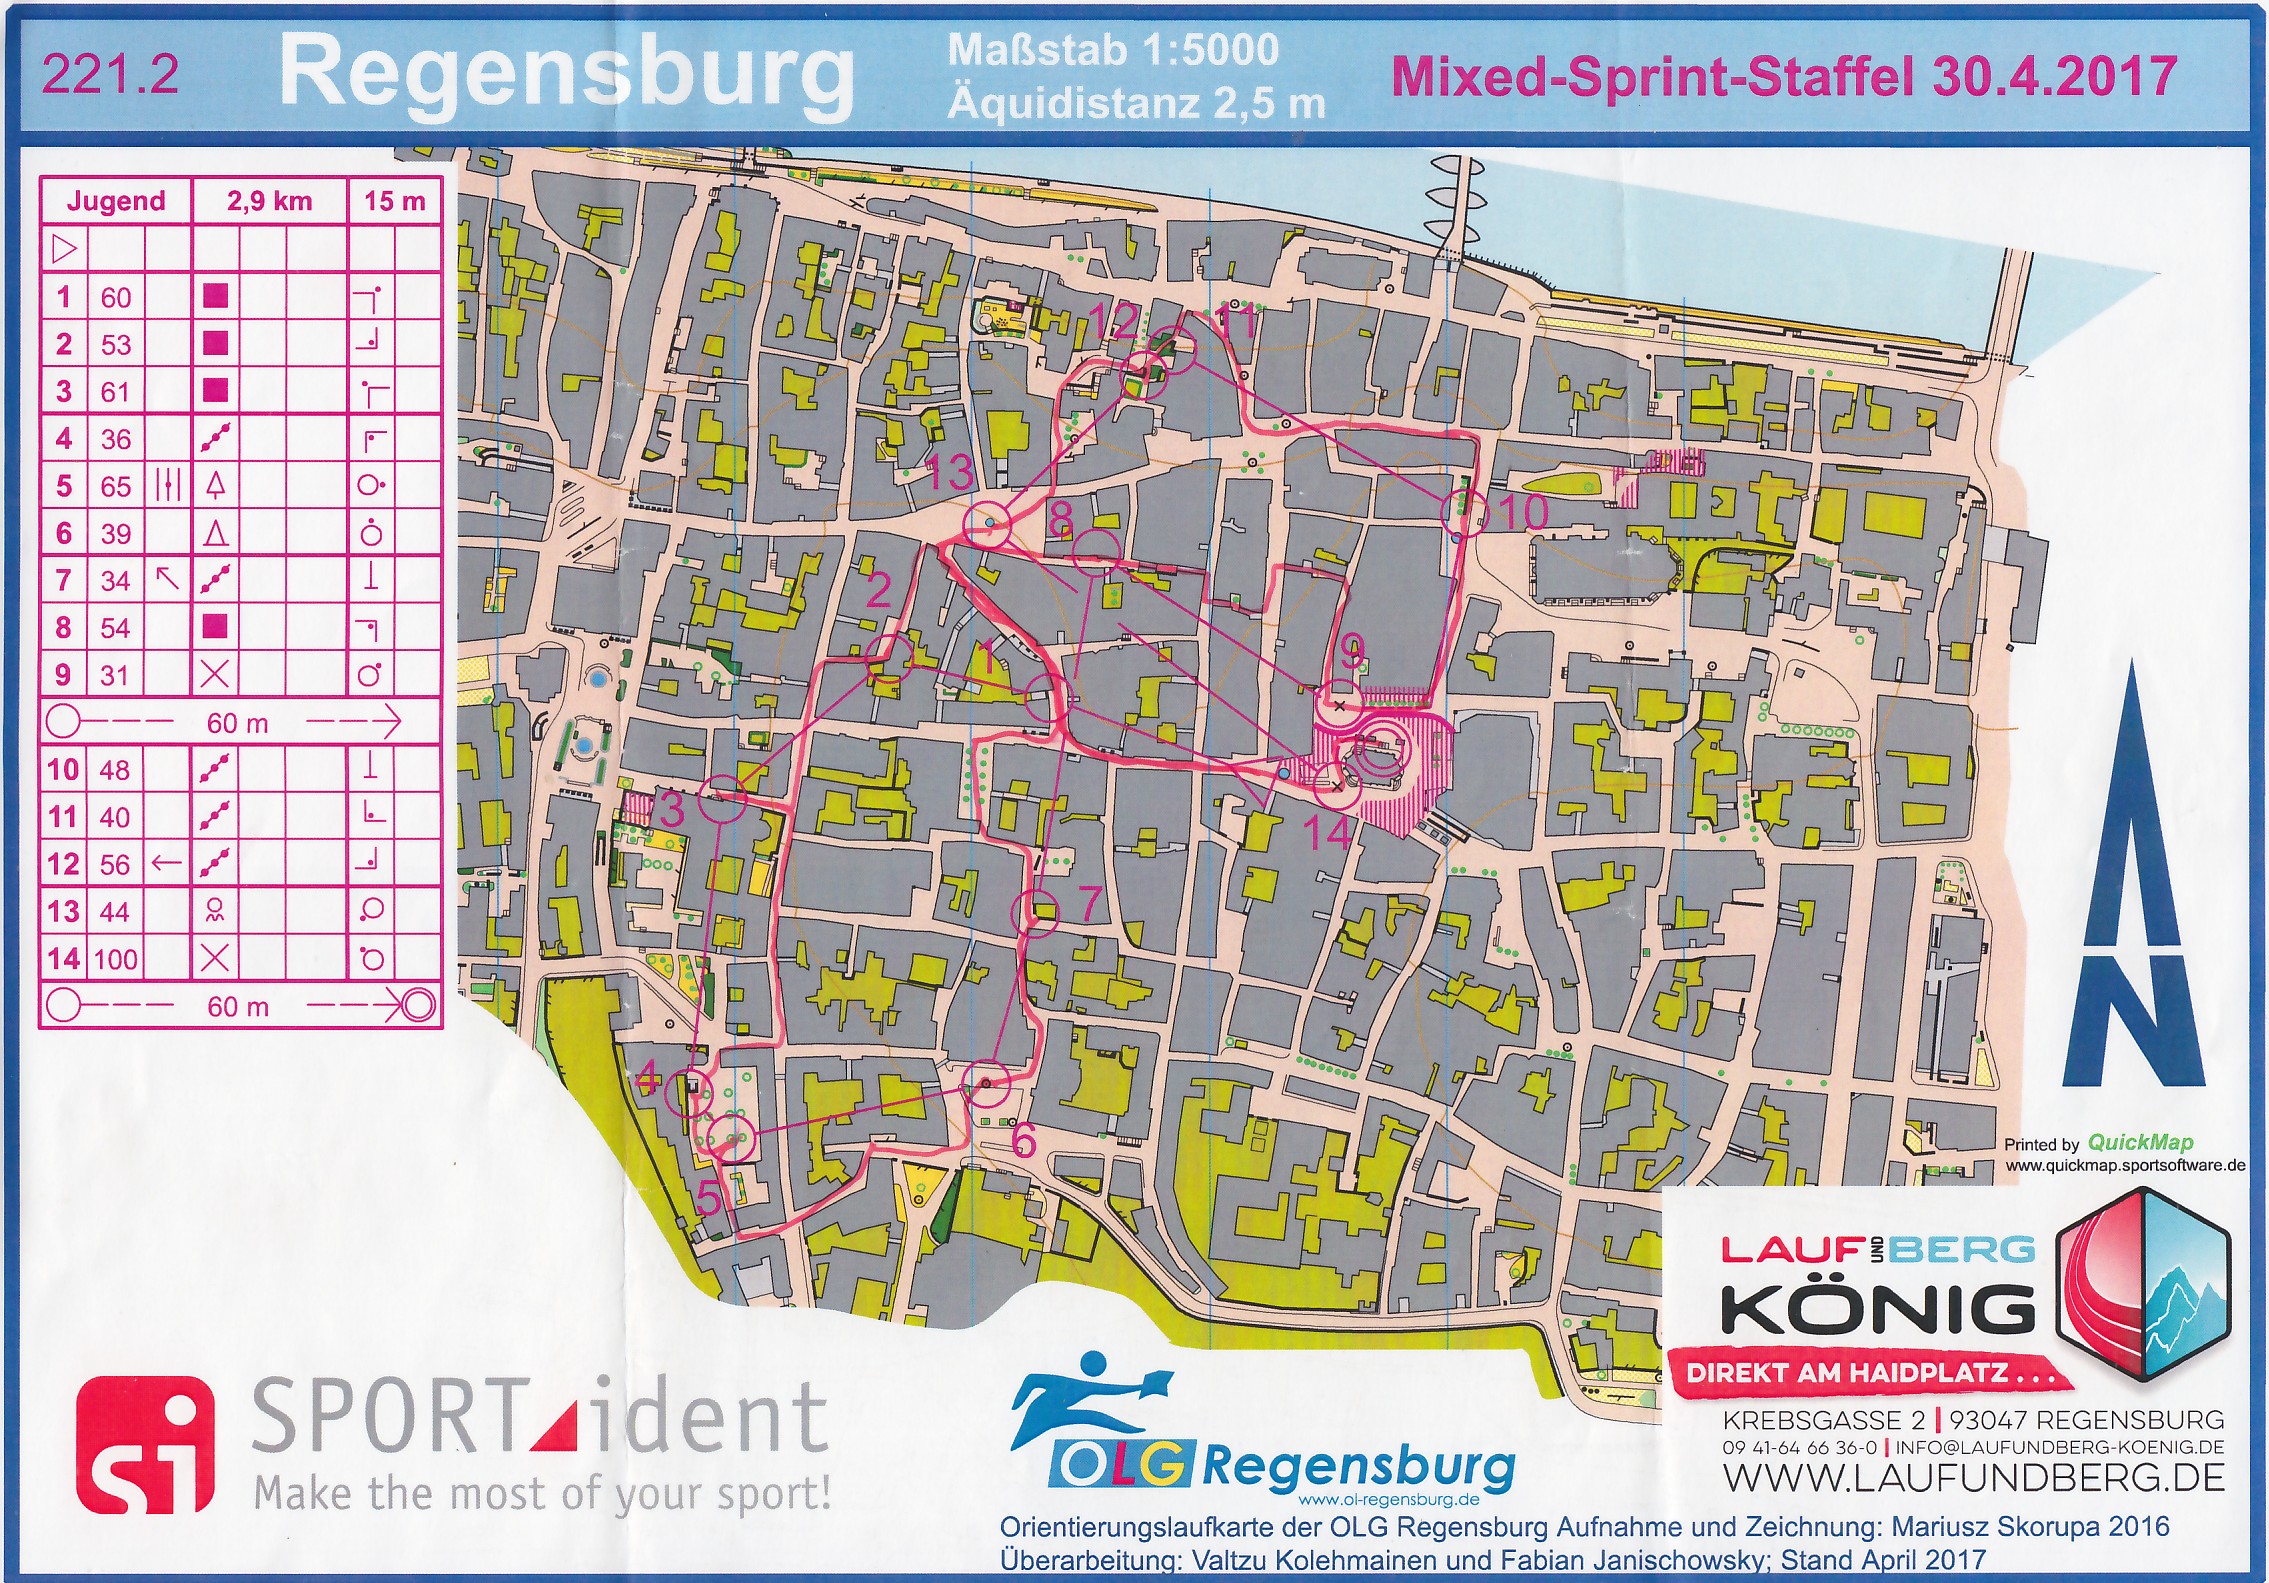 Sprint-Staffel in Regensburg (30-04-2017)